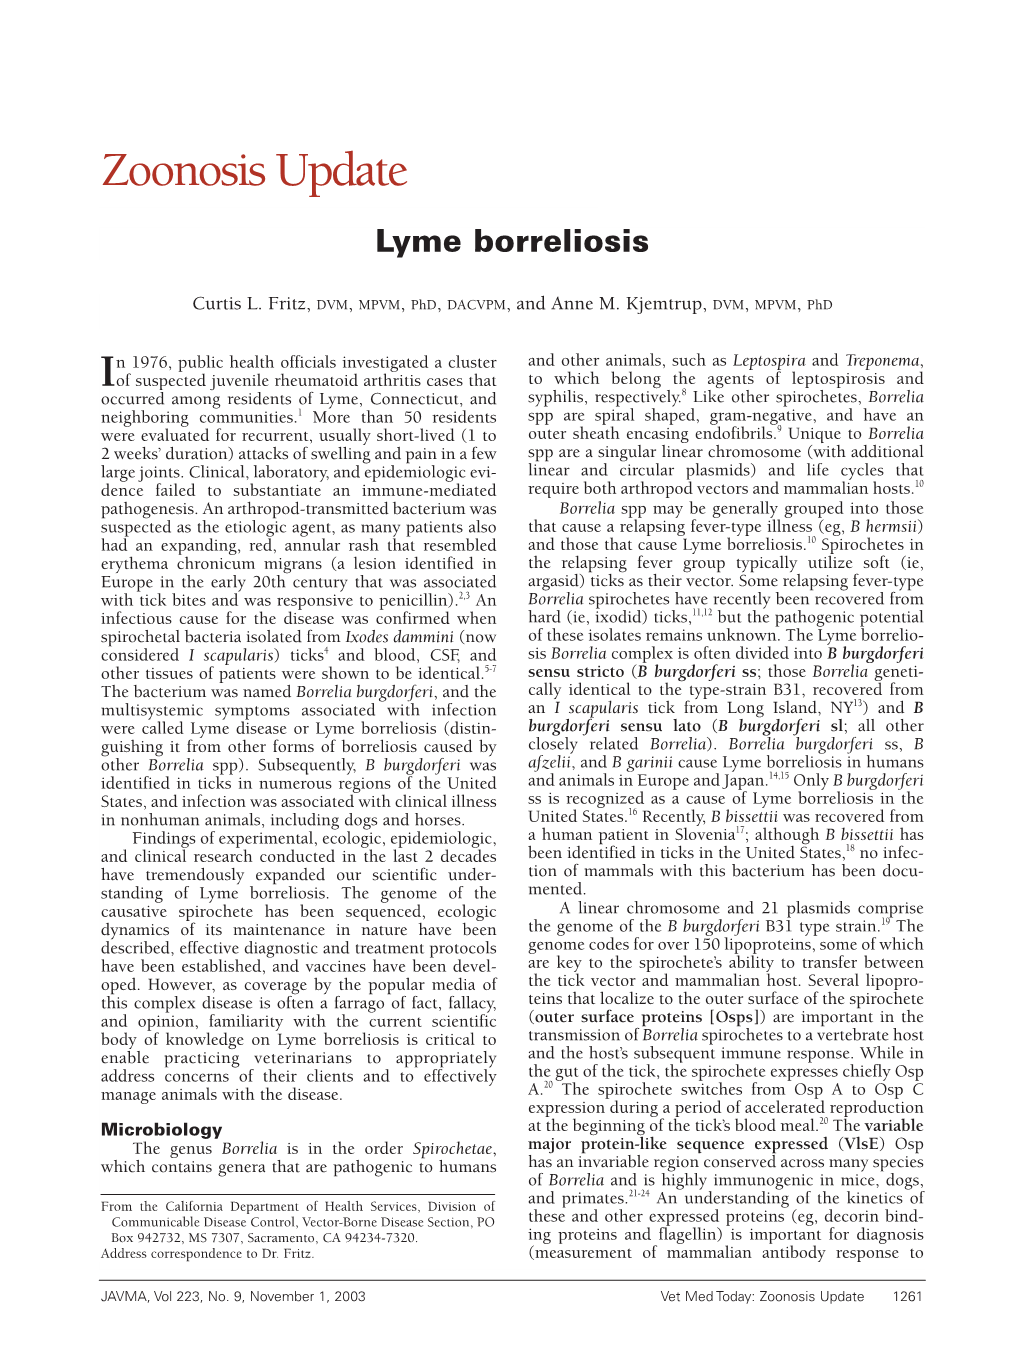 Zoonosis Update Lyme Borreliosis